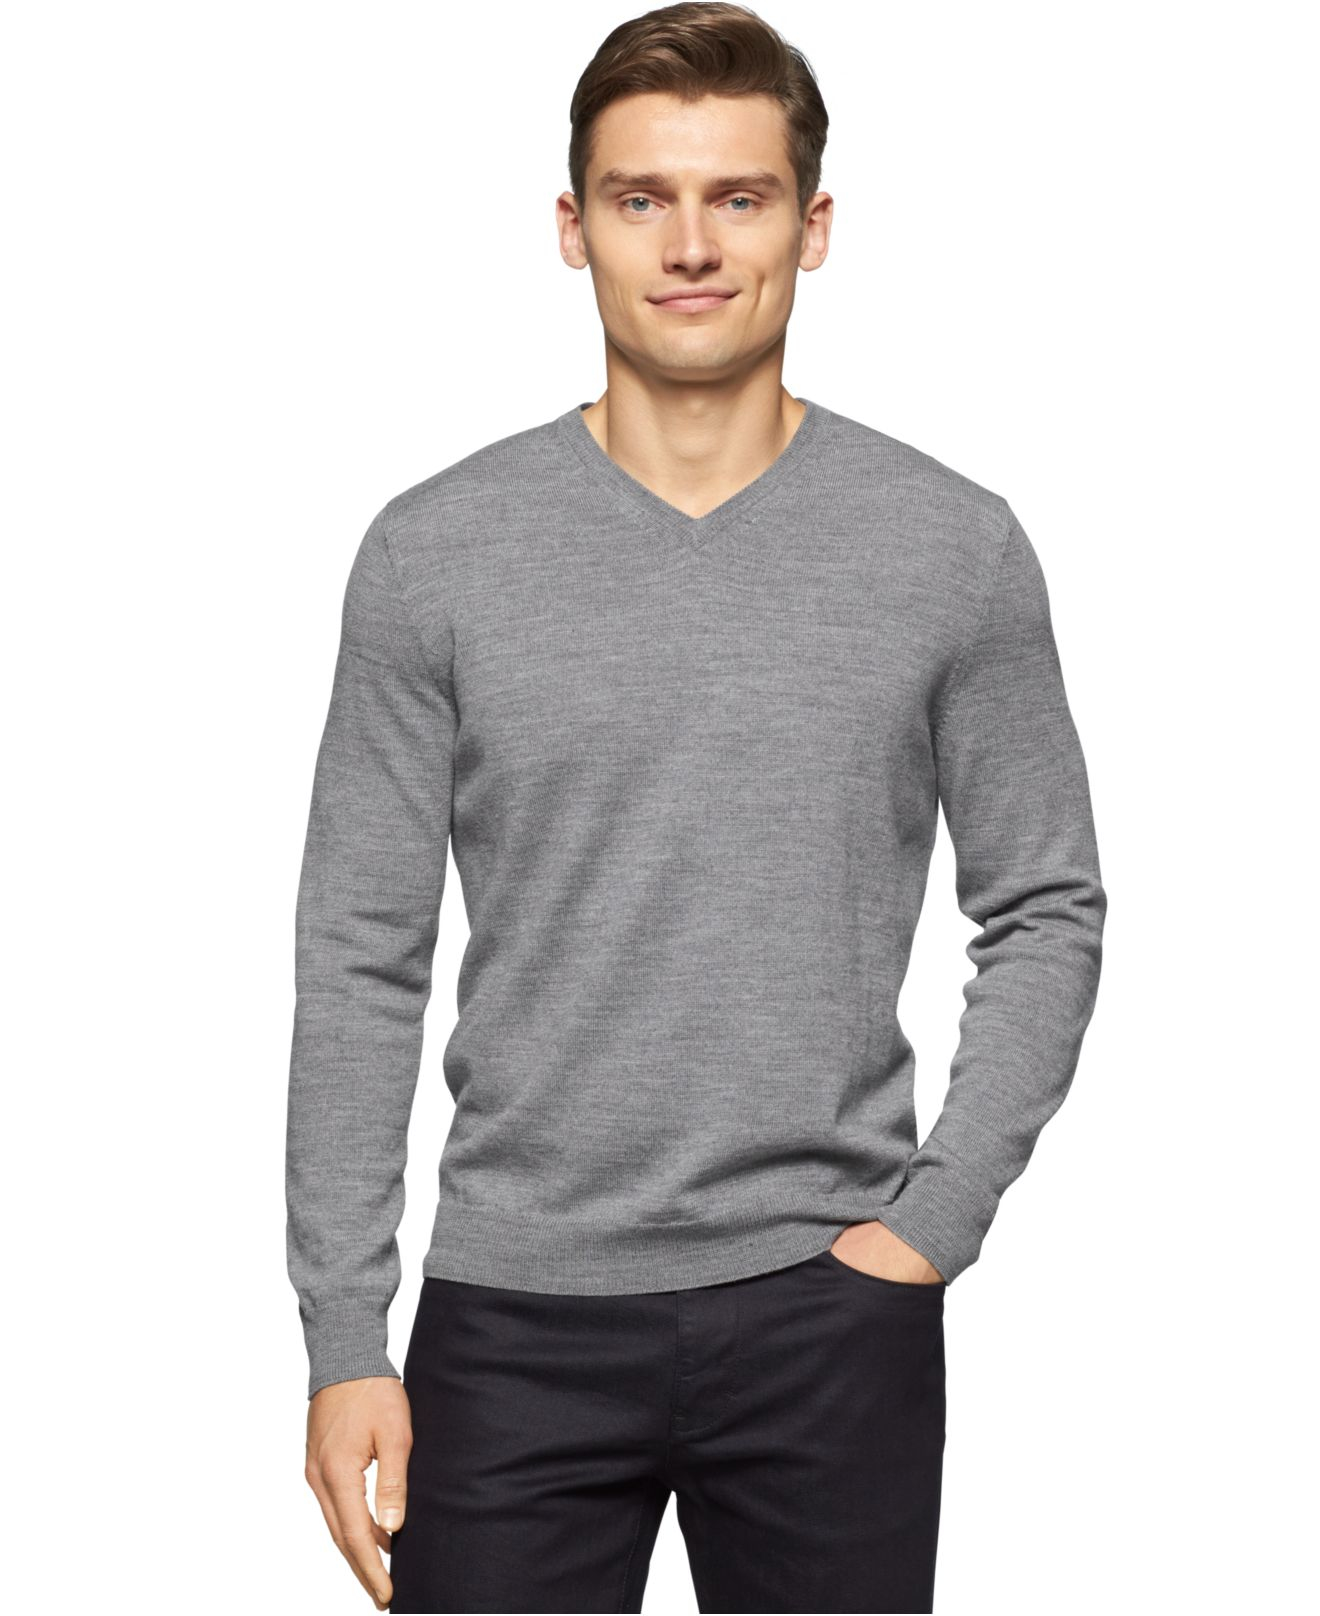 Aliexpress.com : Buy COODRONY Men Sweater Christmas Warm